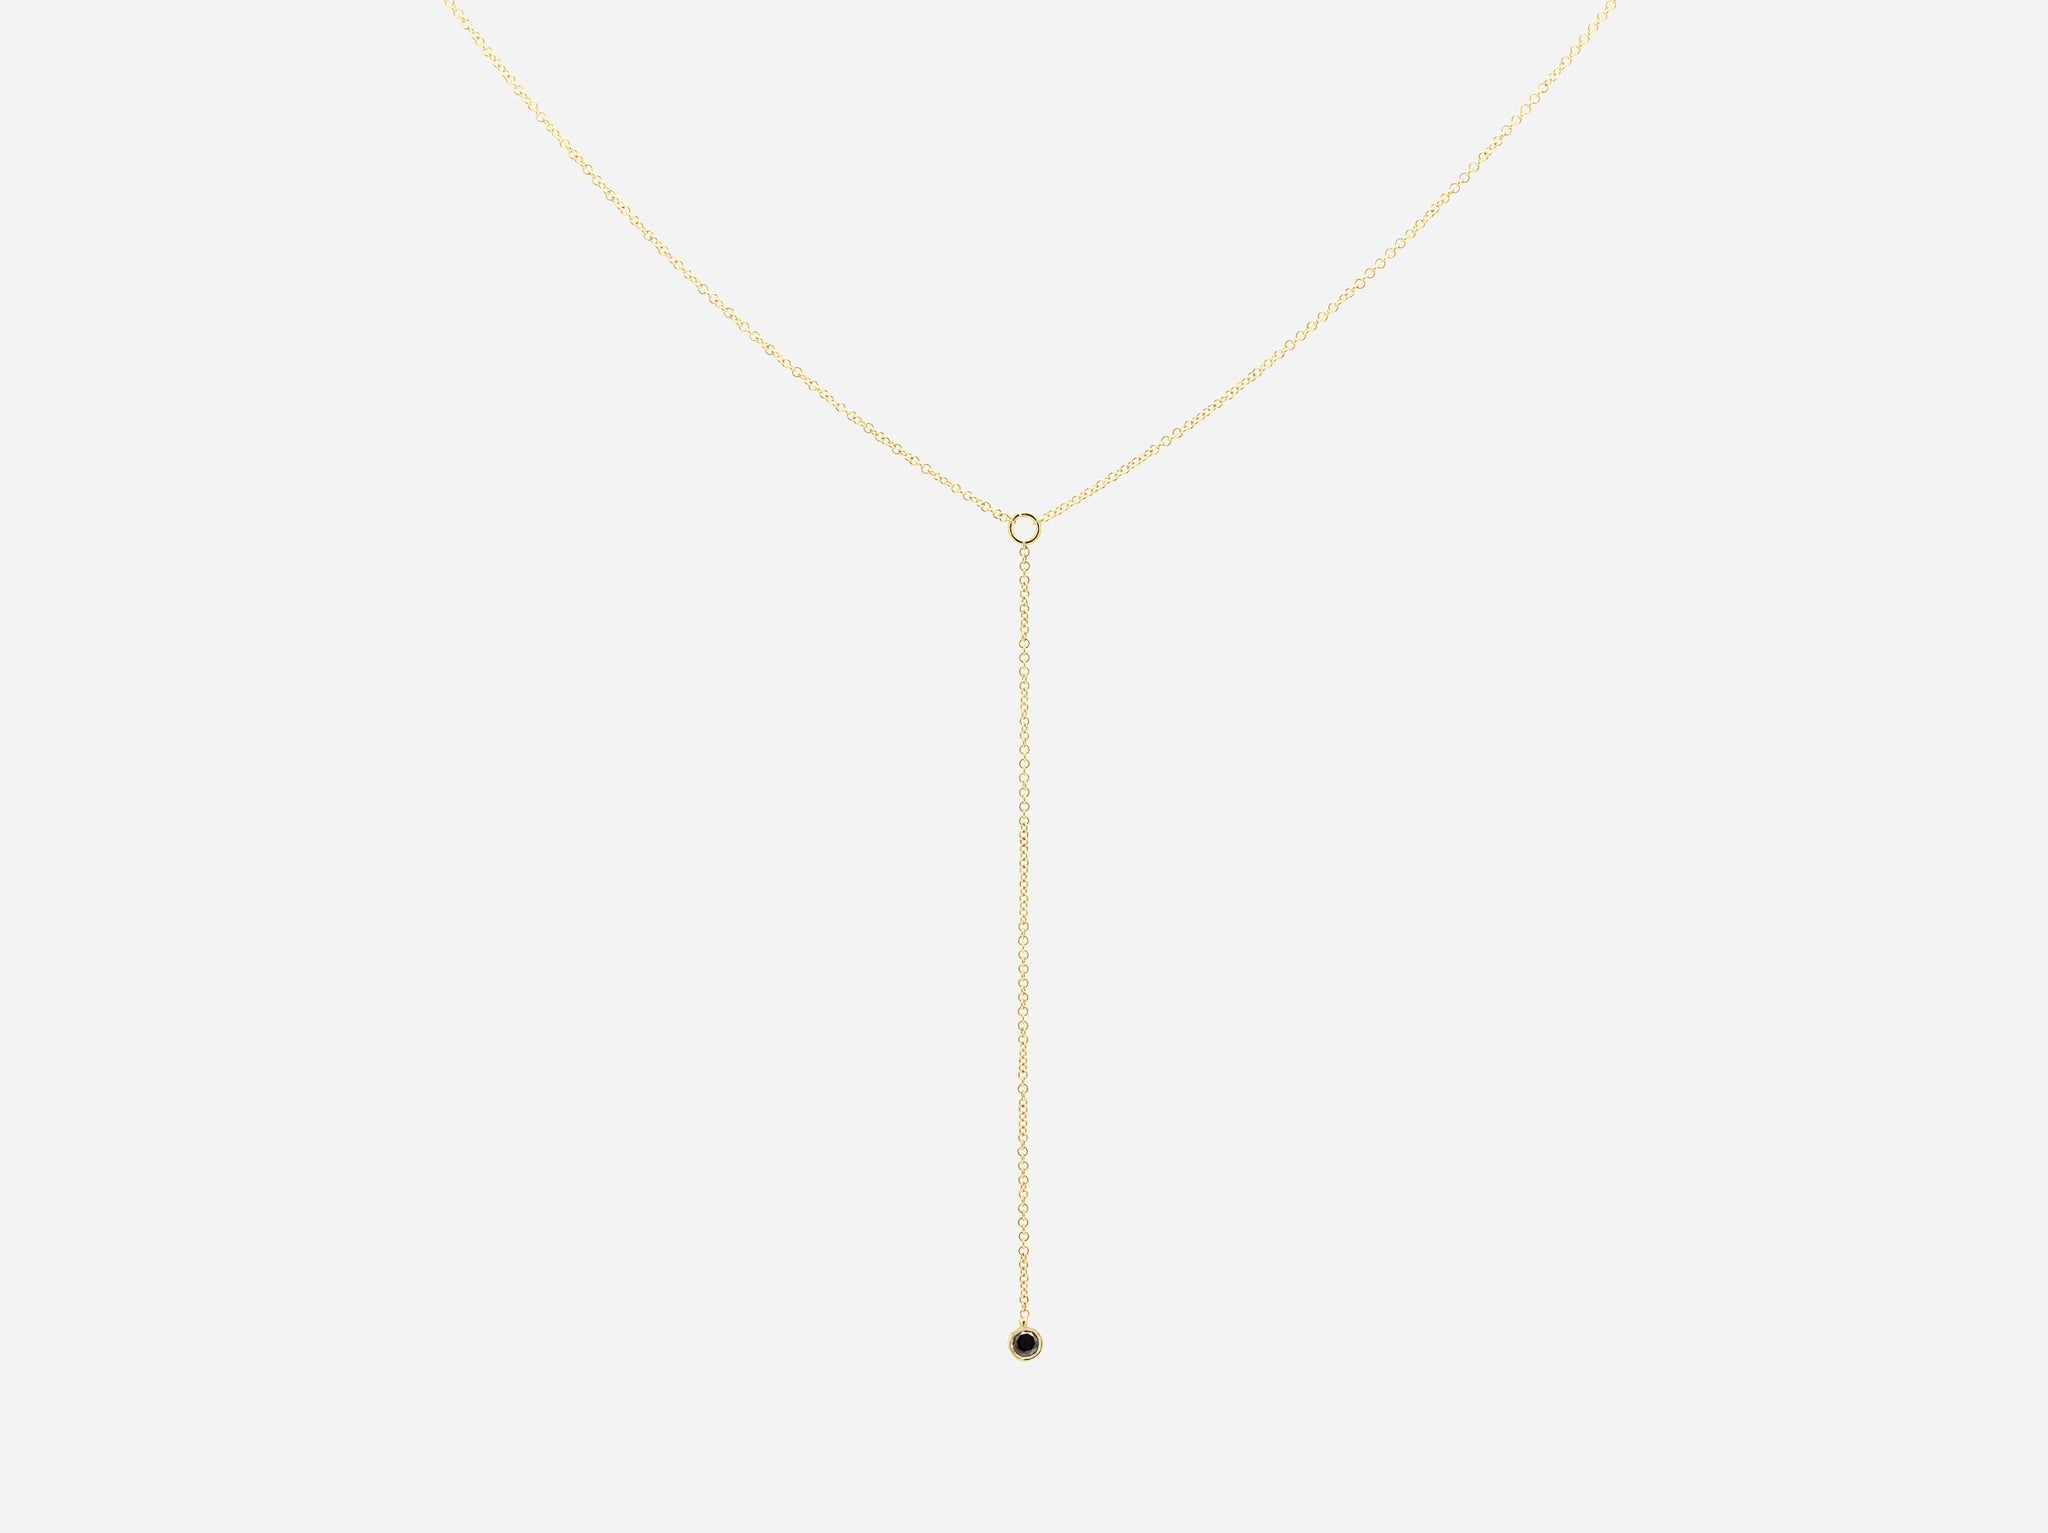 Black Diamond Lariat Necklace – The Missing Piece